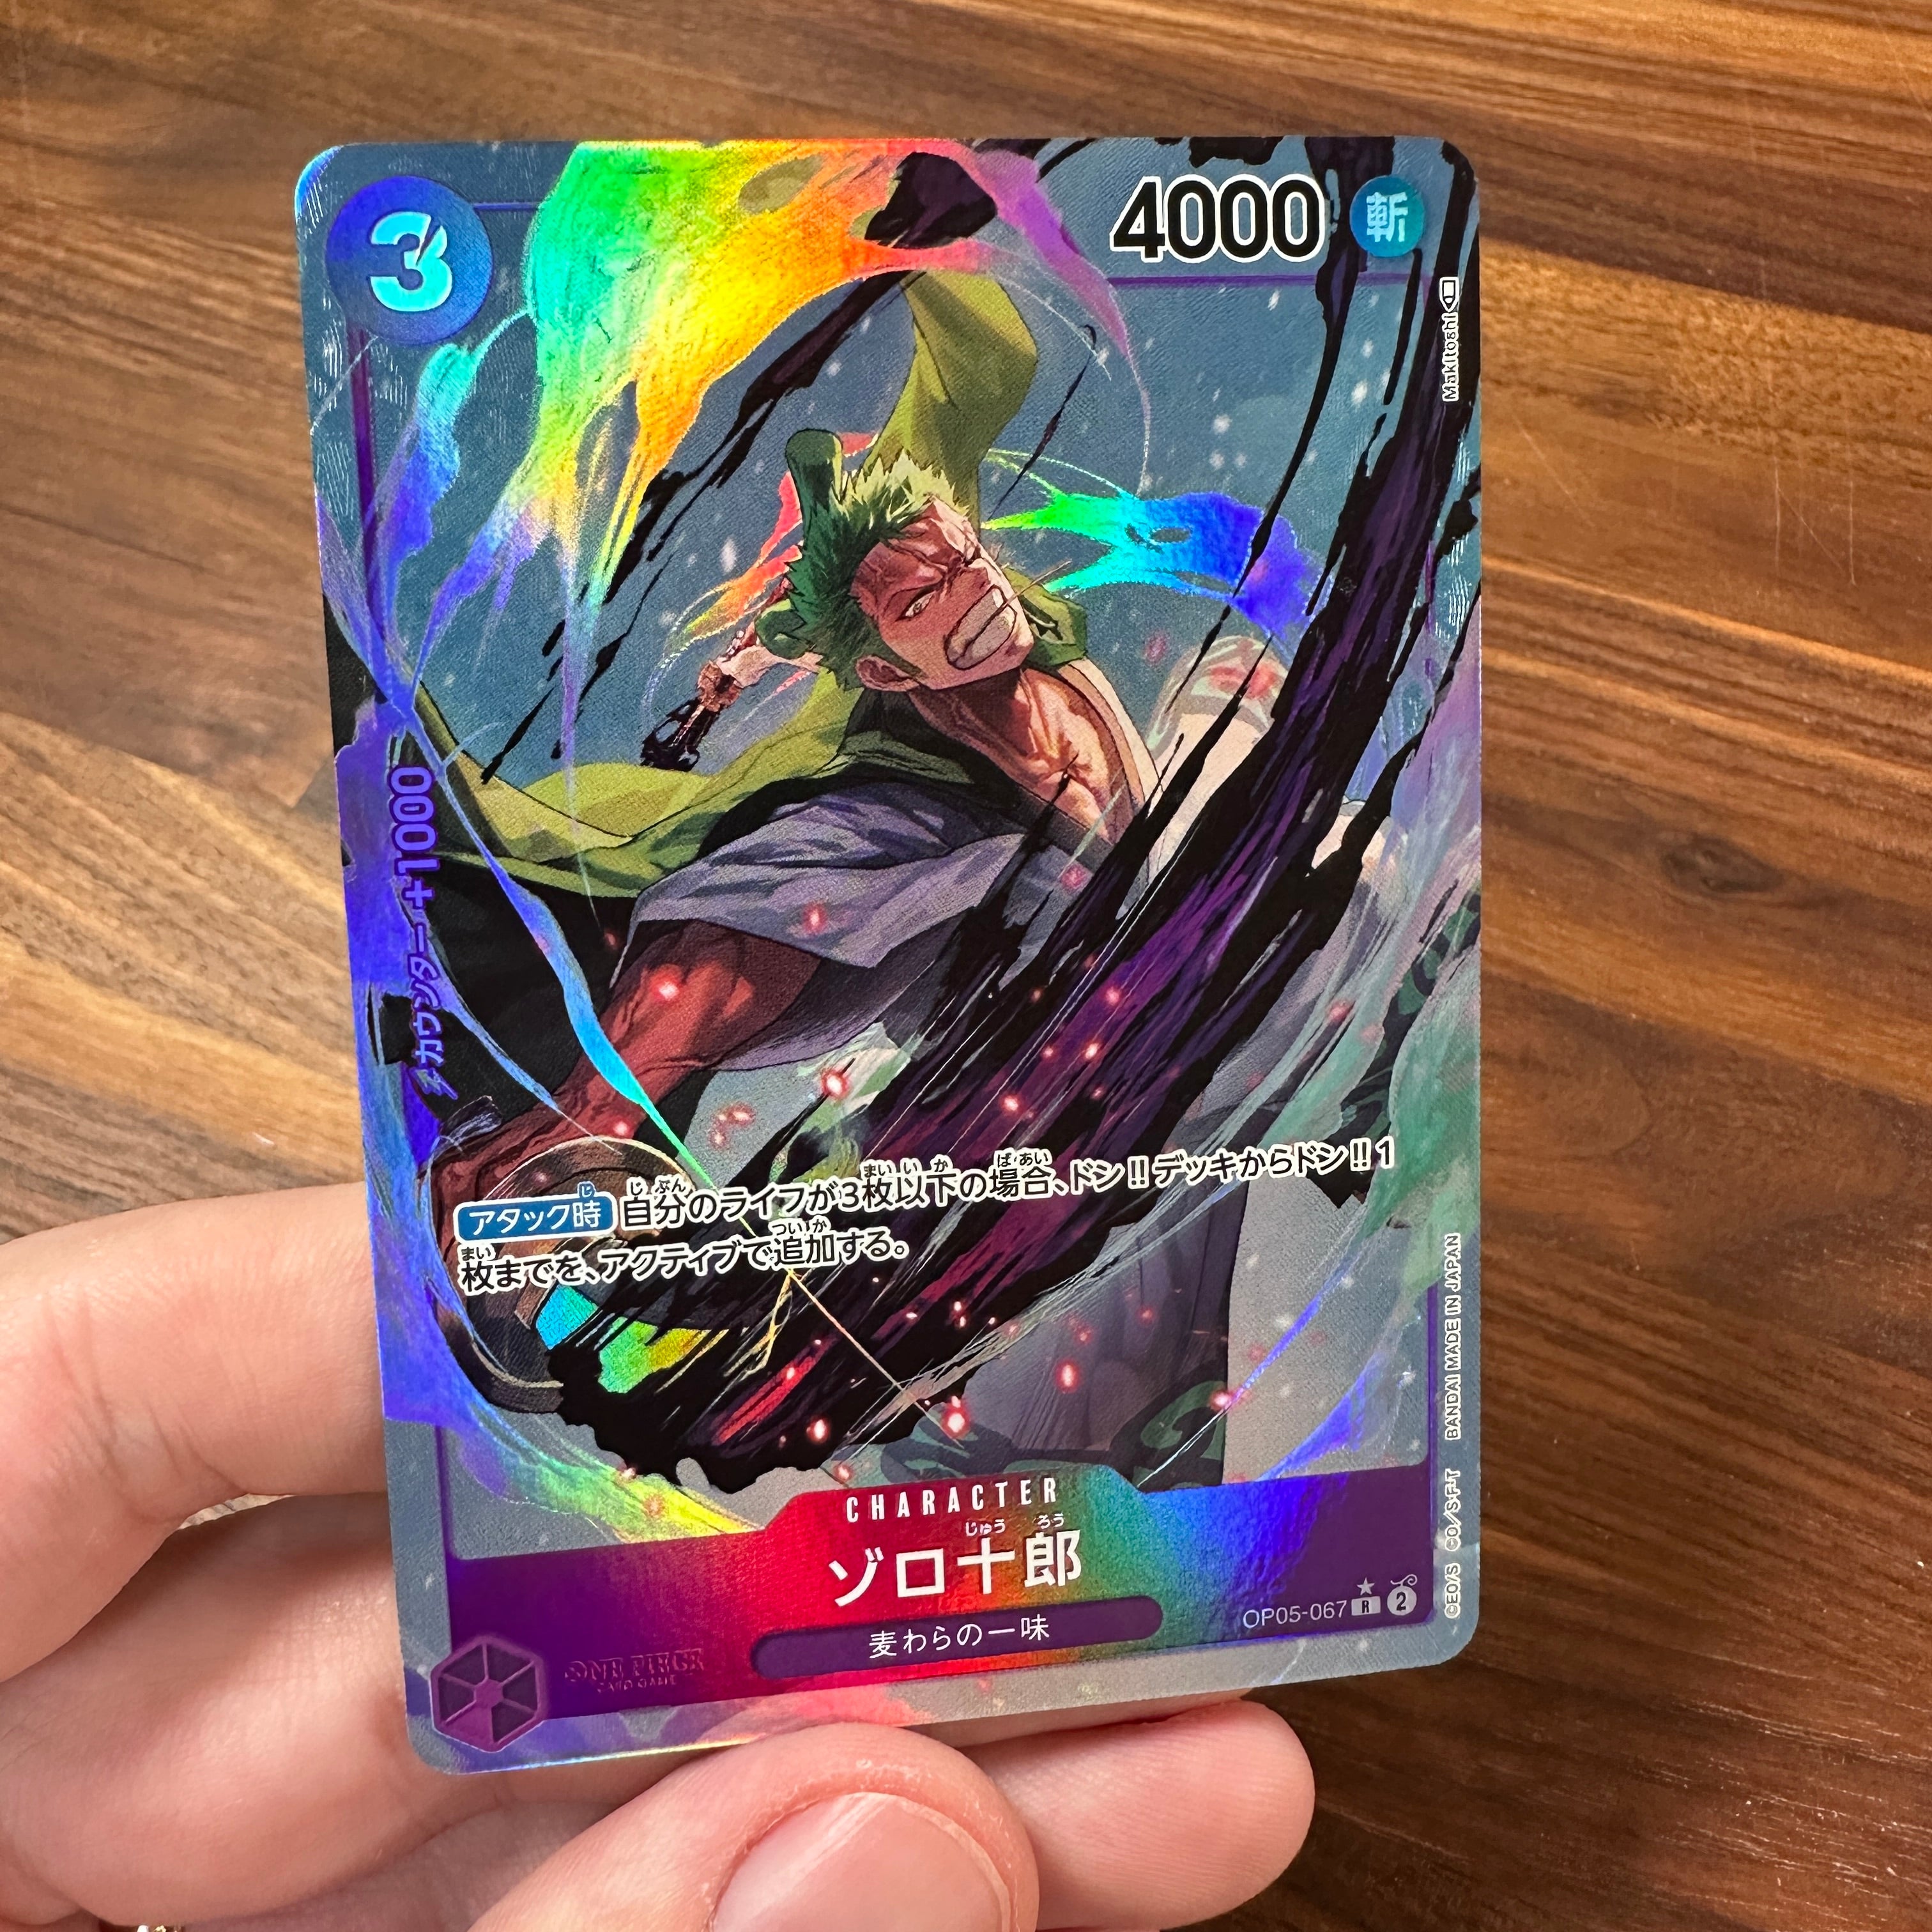 ONE PIECE CARD GAME ｢Awakening of the New Era｣  ONE PIECE CARD GAME OP05-067 Rare Parallel card Zoro-Juurou